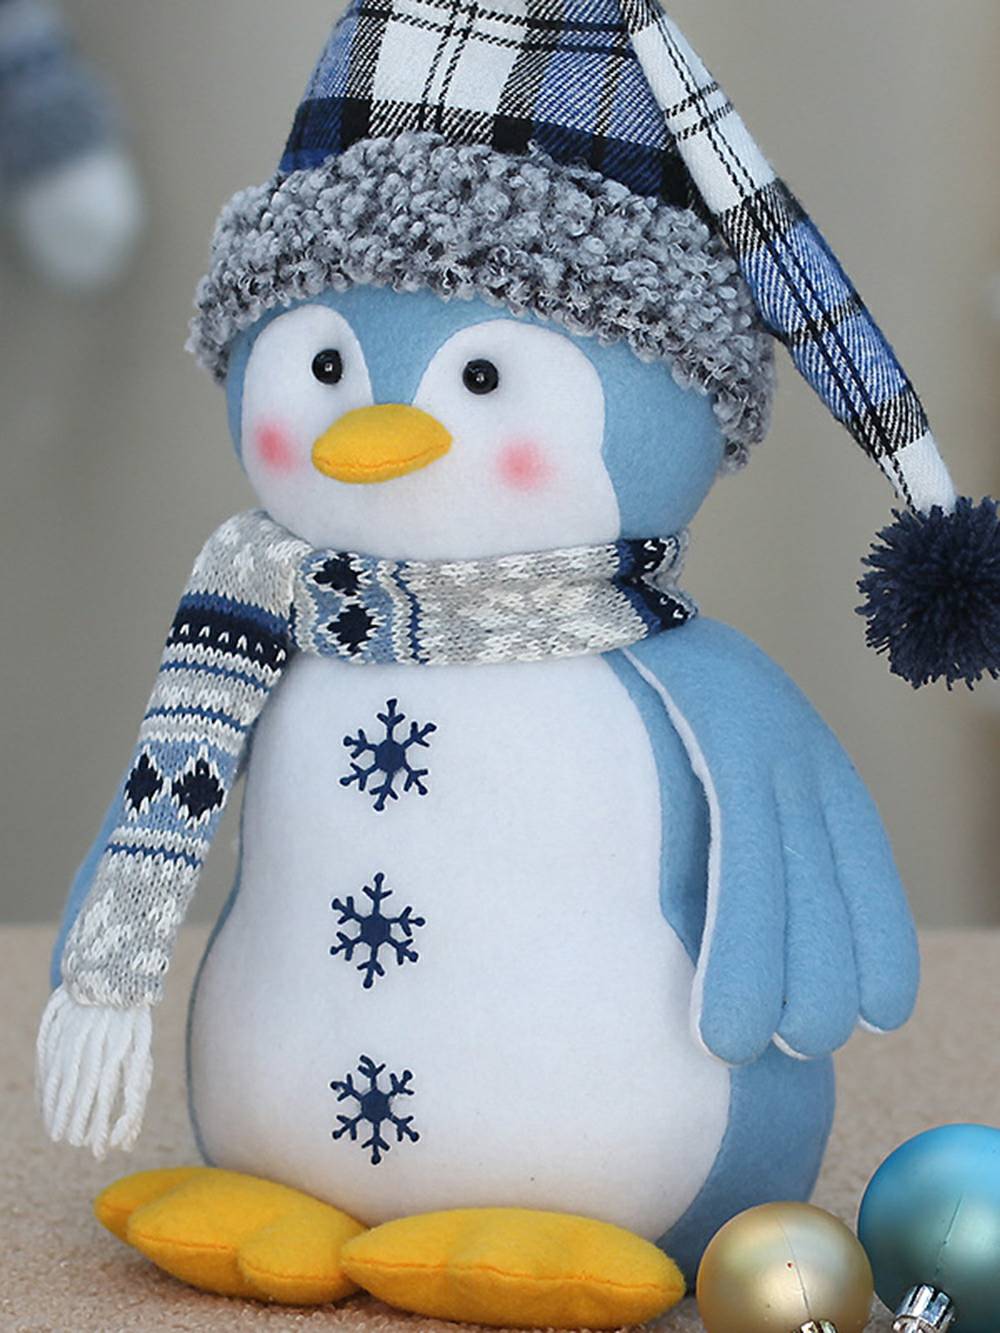 Jul blått stoff isbjørn pingvin dukke ornamenter